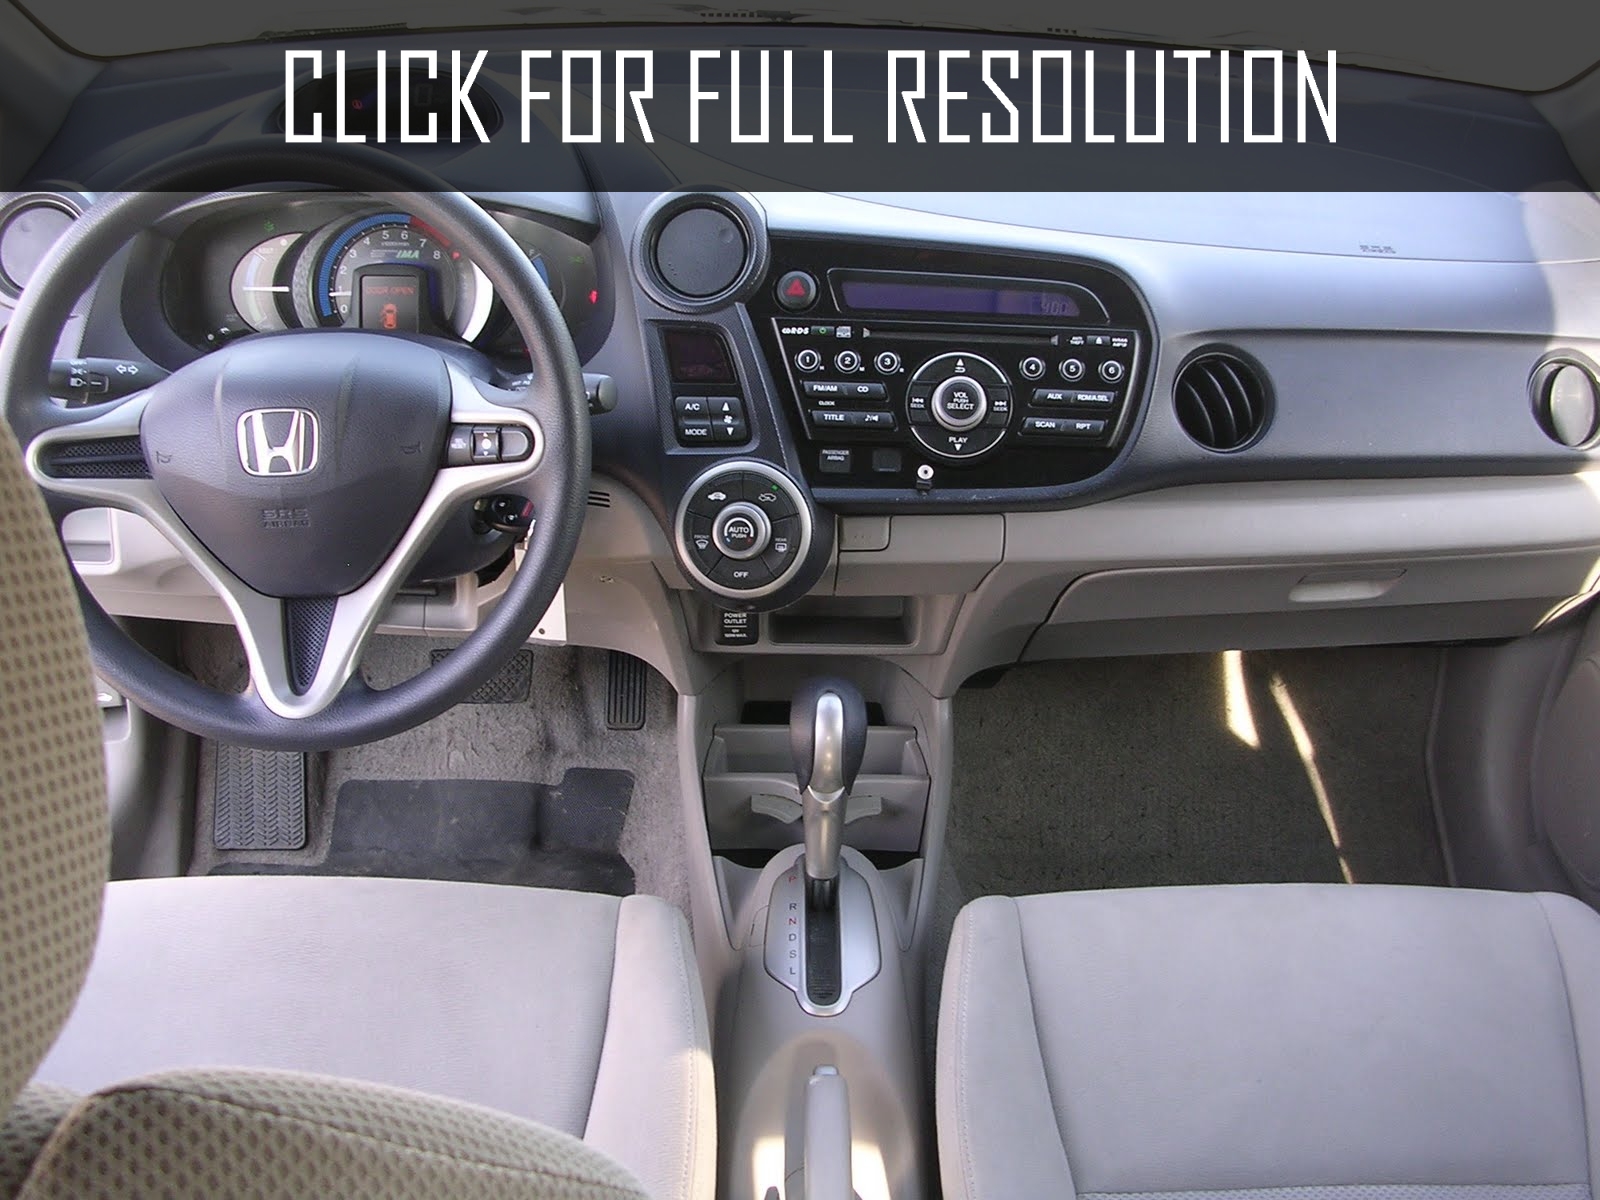 Honda Insight Lx 2010